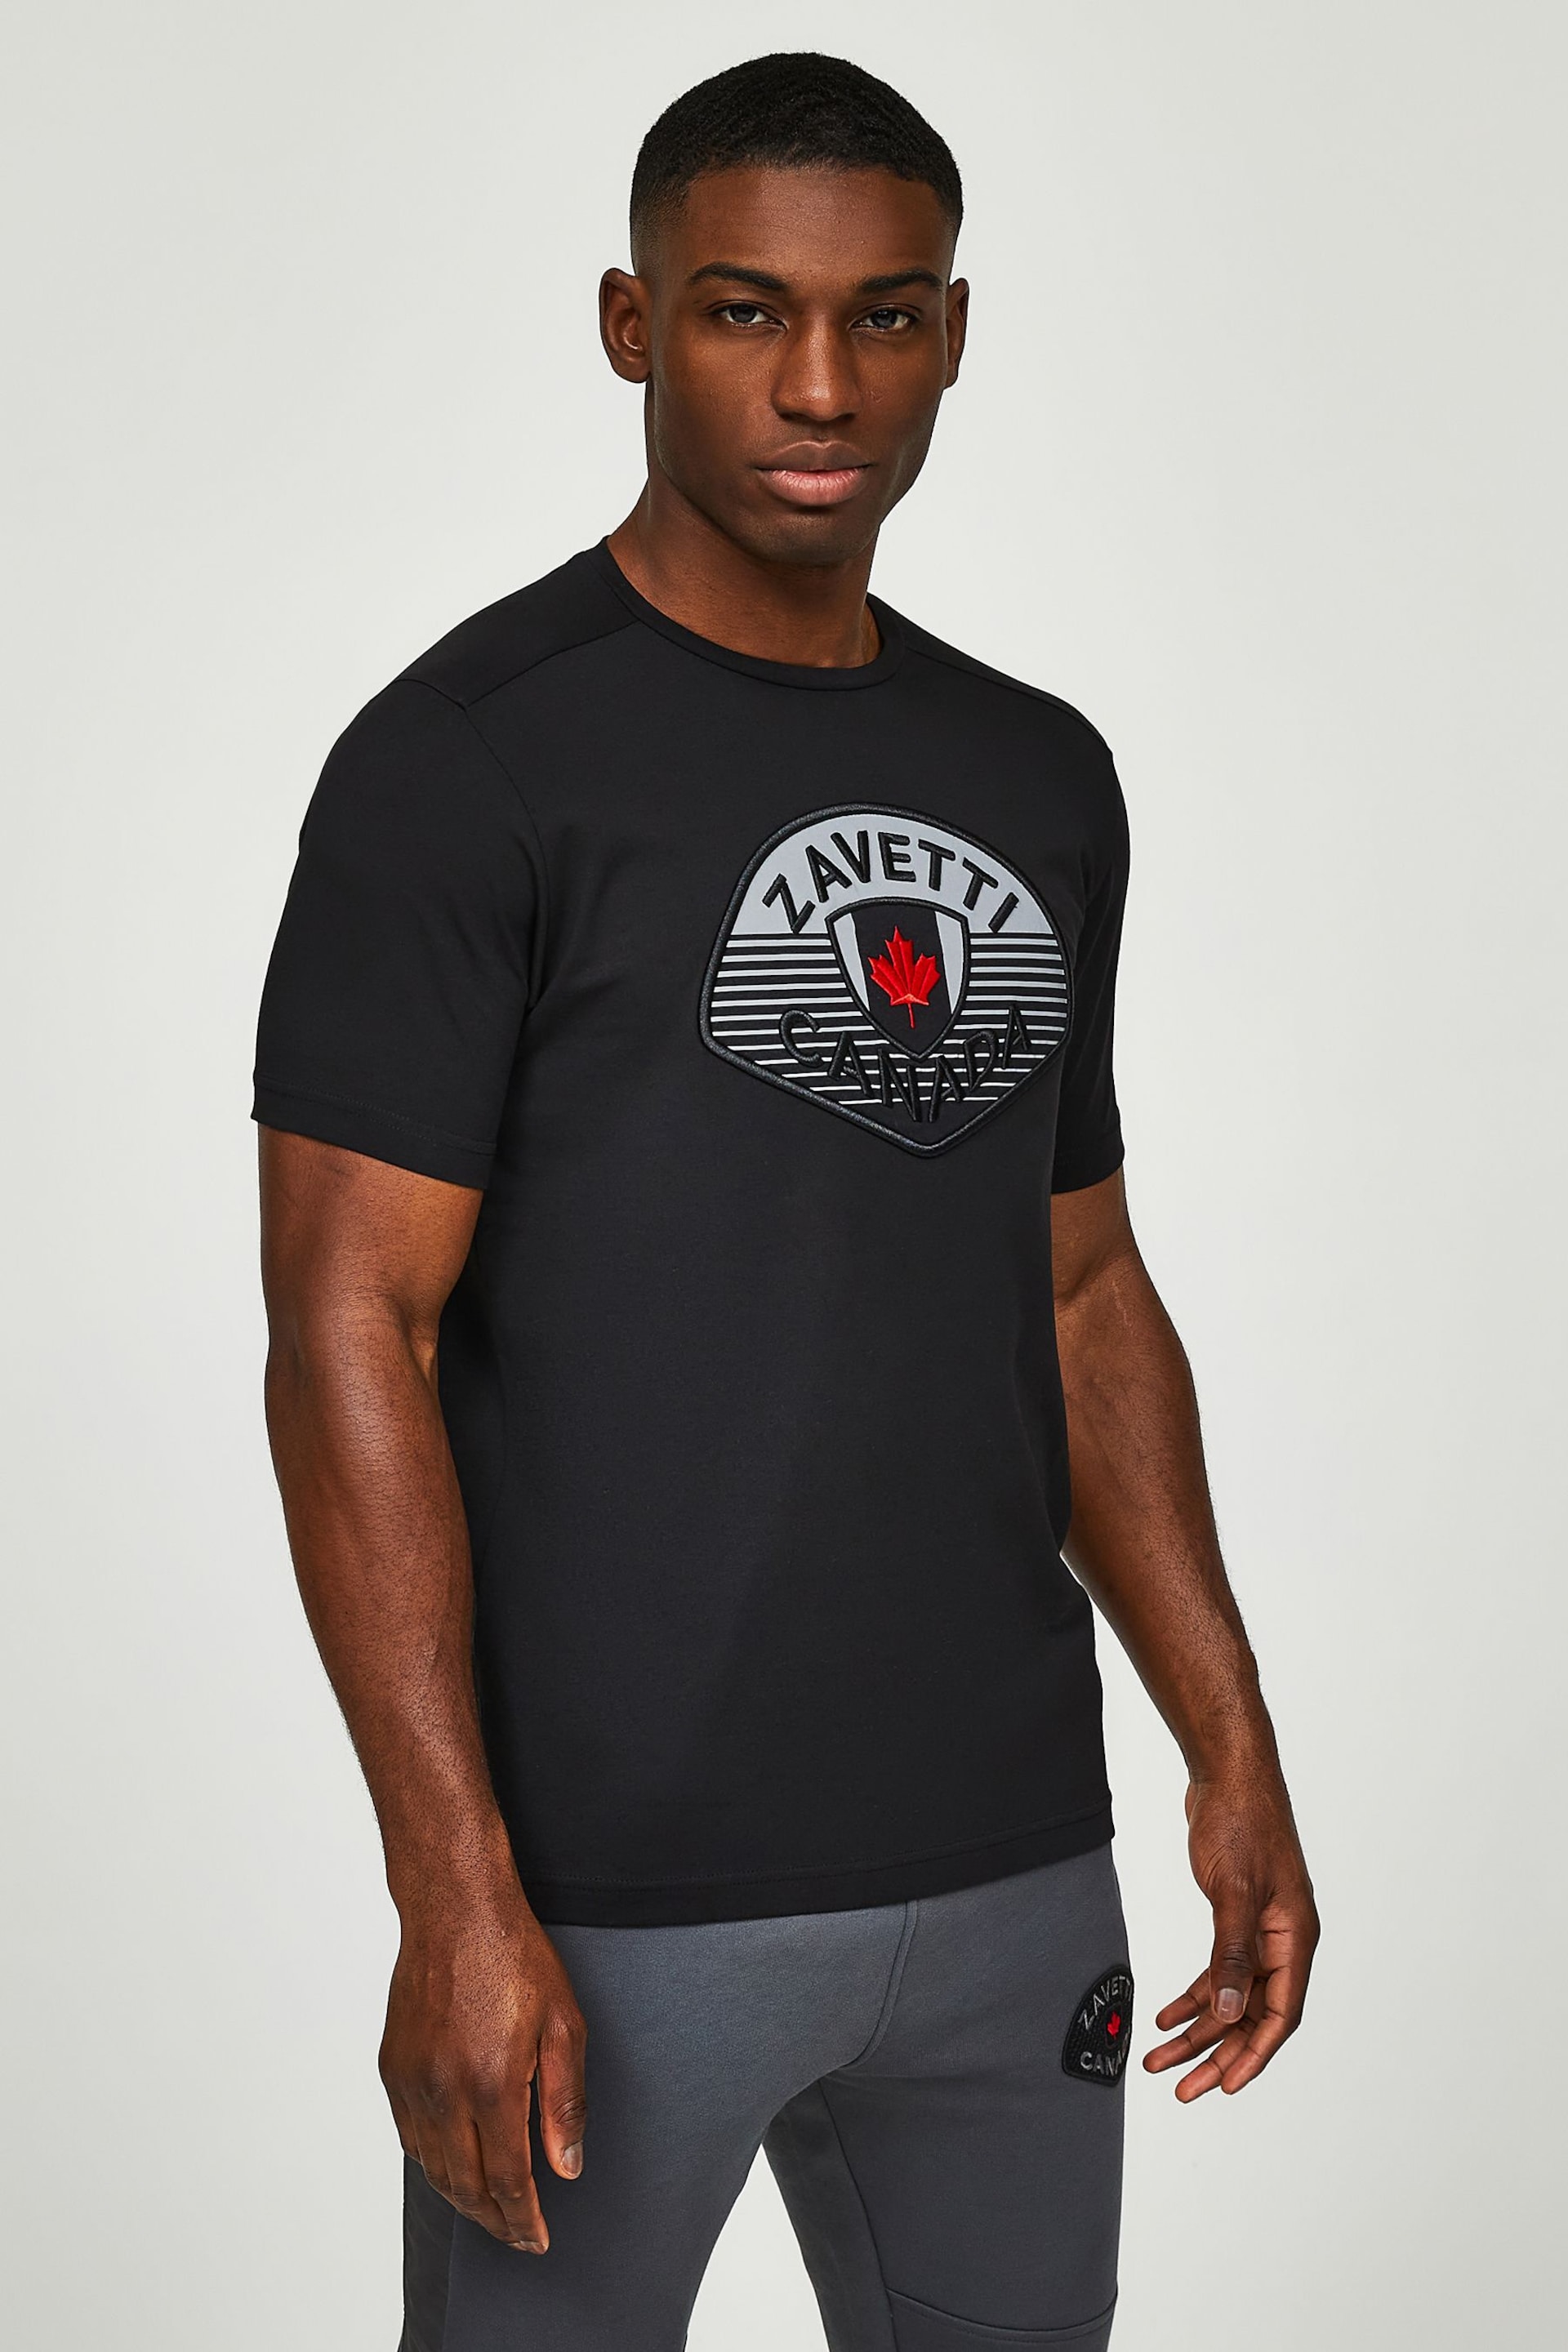 Zavetti Canada Black Botticini Reflective T-Shirt - Image 1 of 6